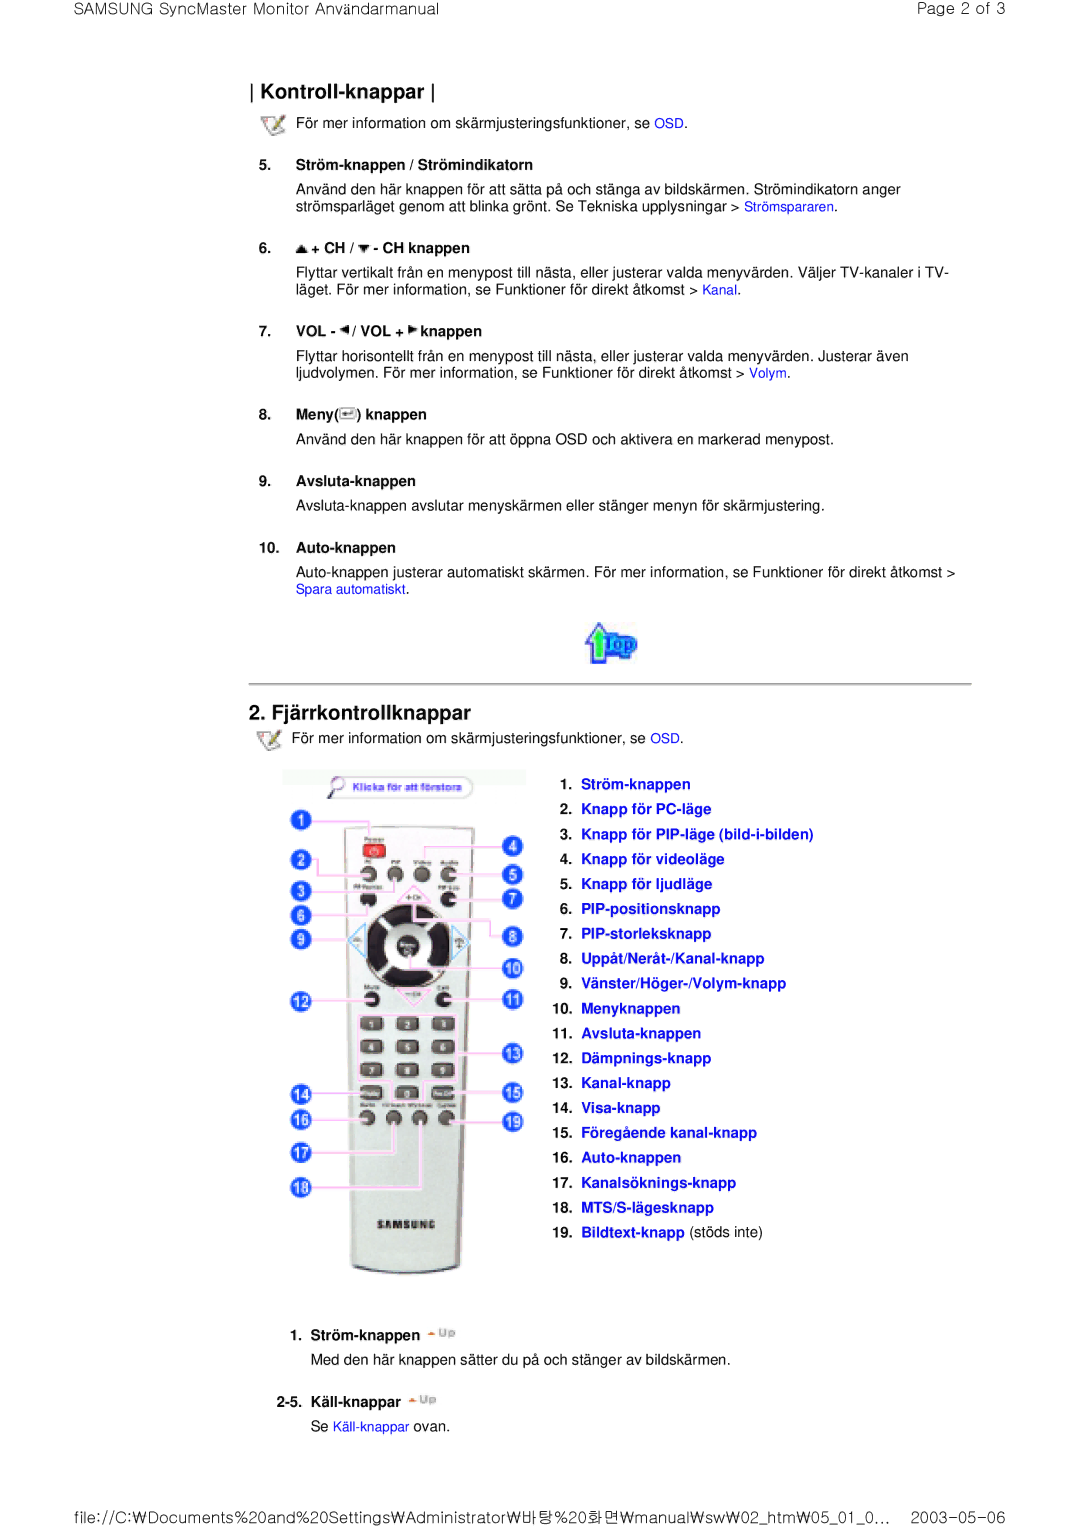 Samsung RT17ASSST/EDC, RT15ASSST/EDC manual Kontroll-knappar, Fjärrkontrollknappar 